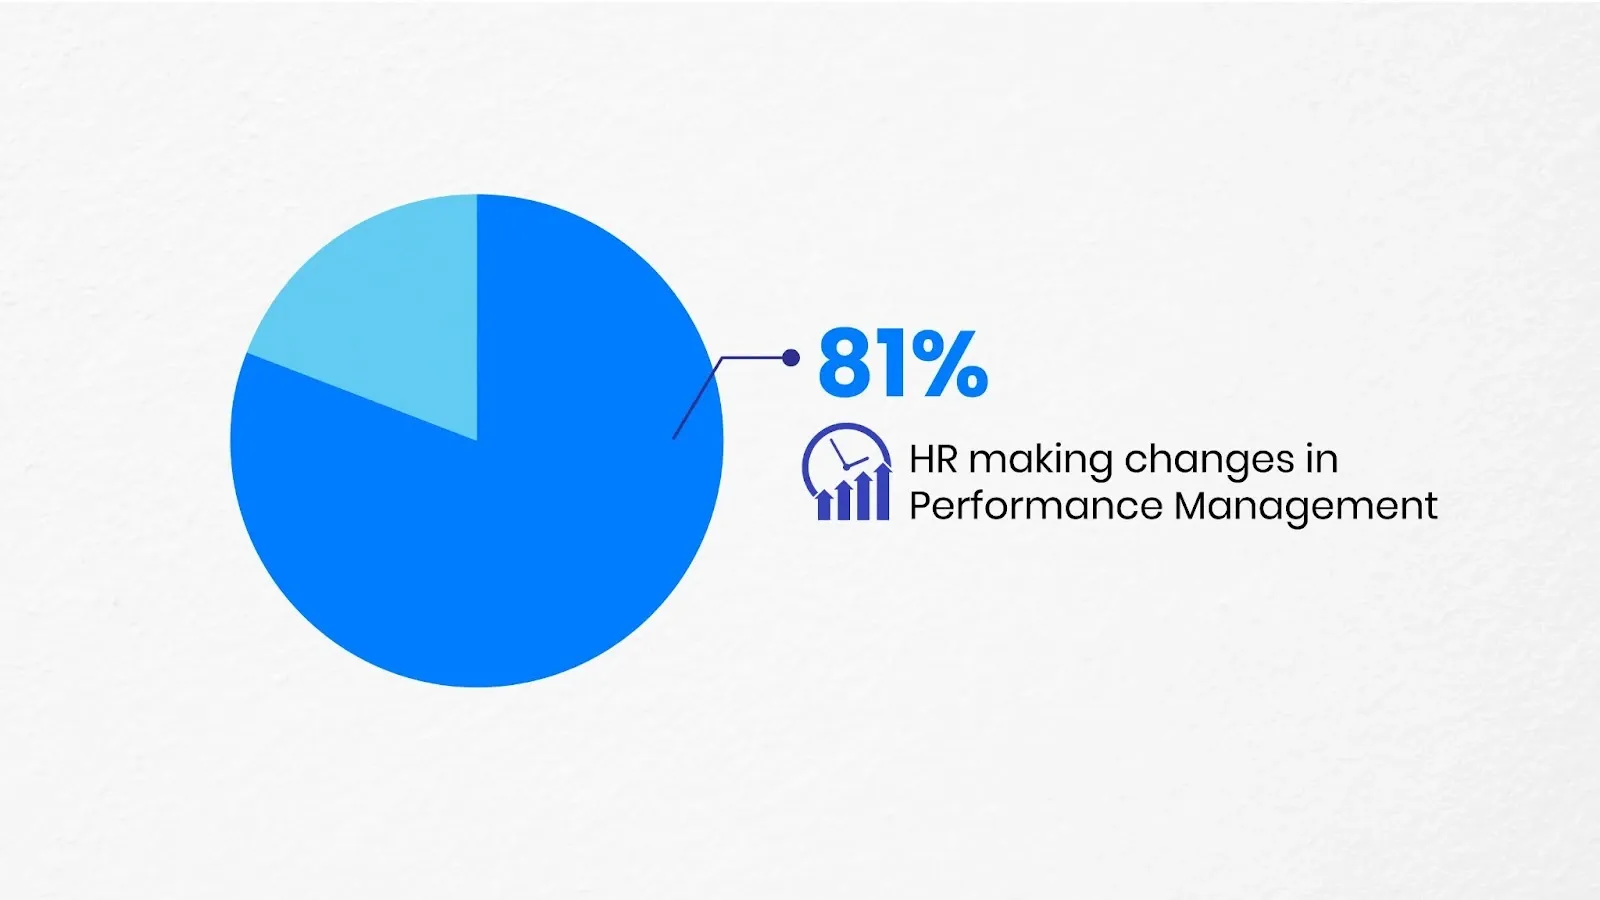 key statistics; blue pie chart representing percentage of HR